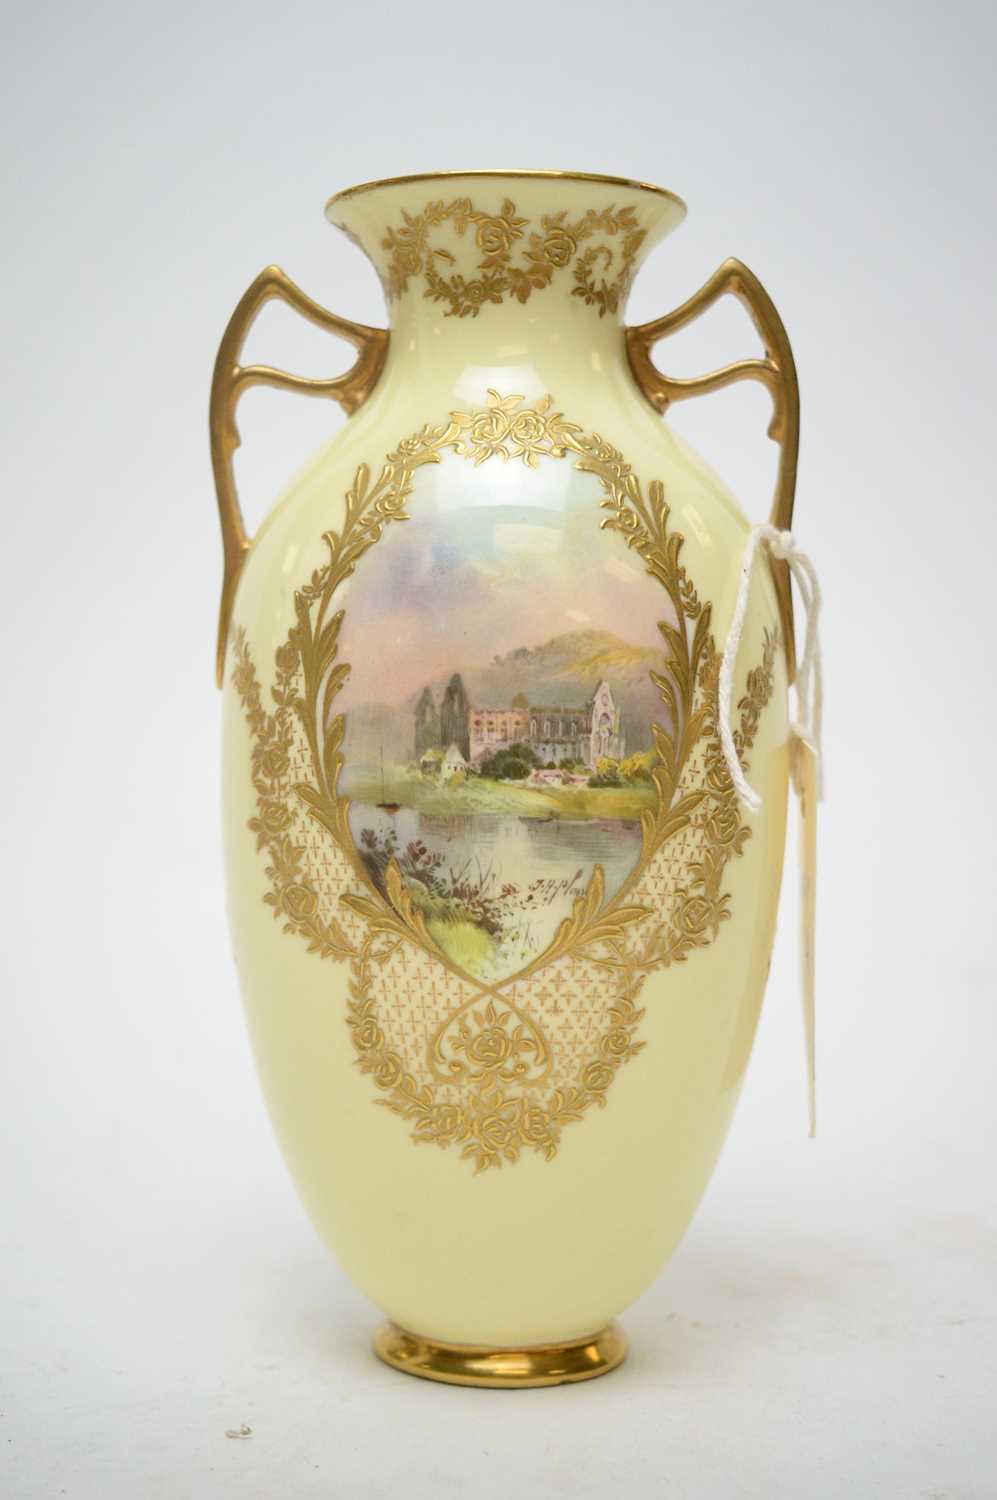 Lot 335 - J.H. Plant Royal Doulton hand-painted ovoid vase.